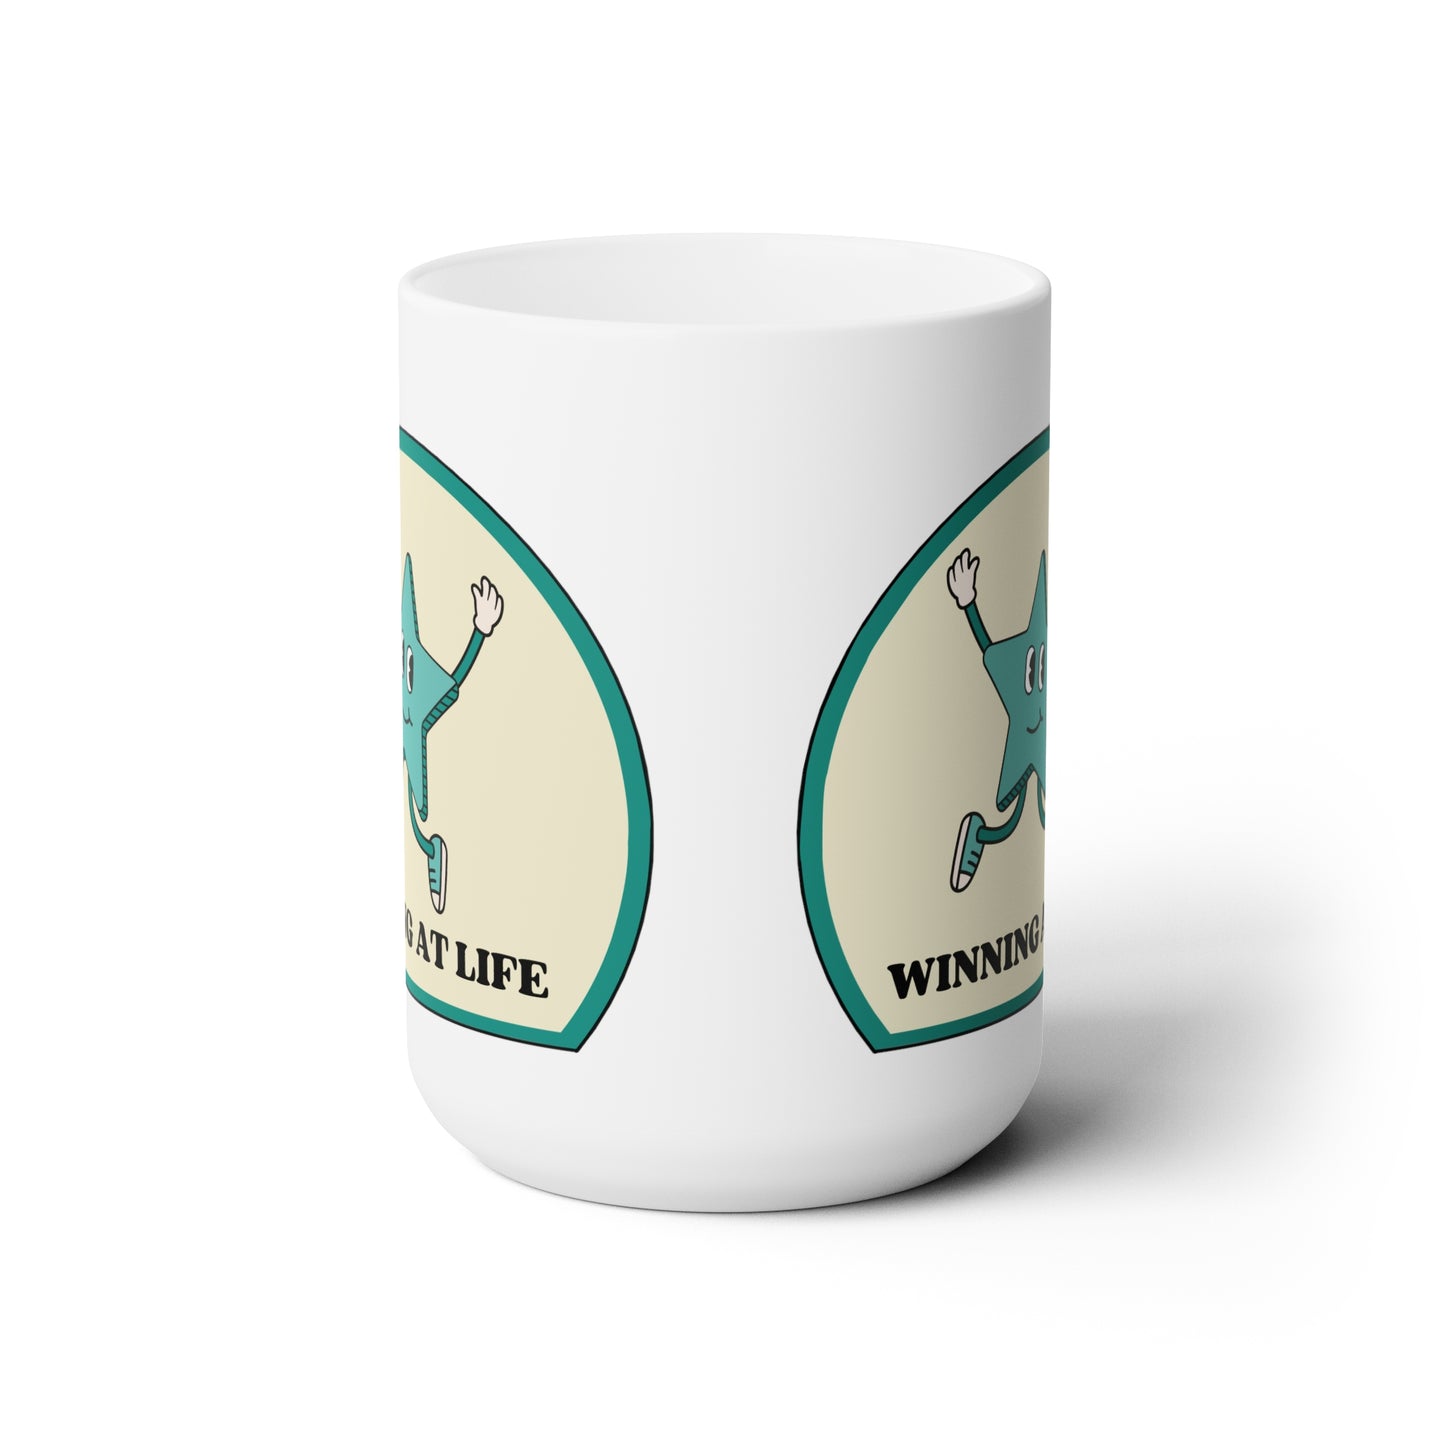 Retro Vibes "Winning at Life" Coffee Mug 15oz